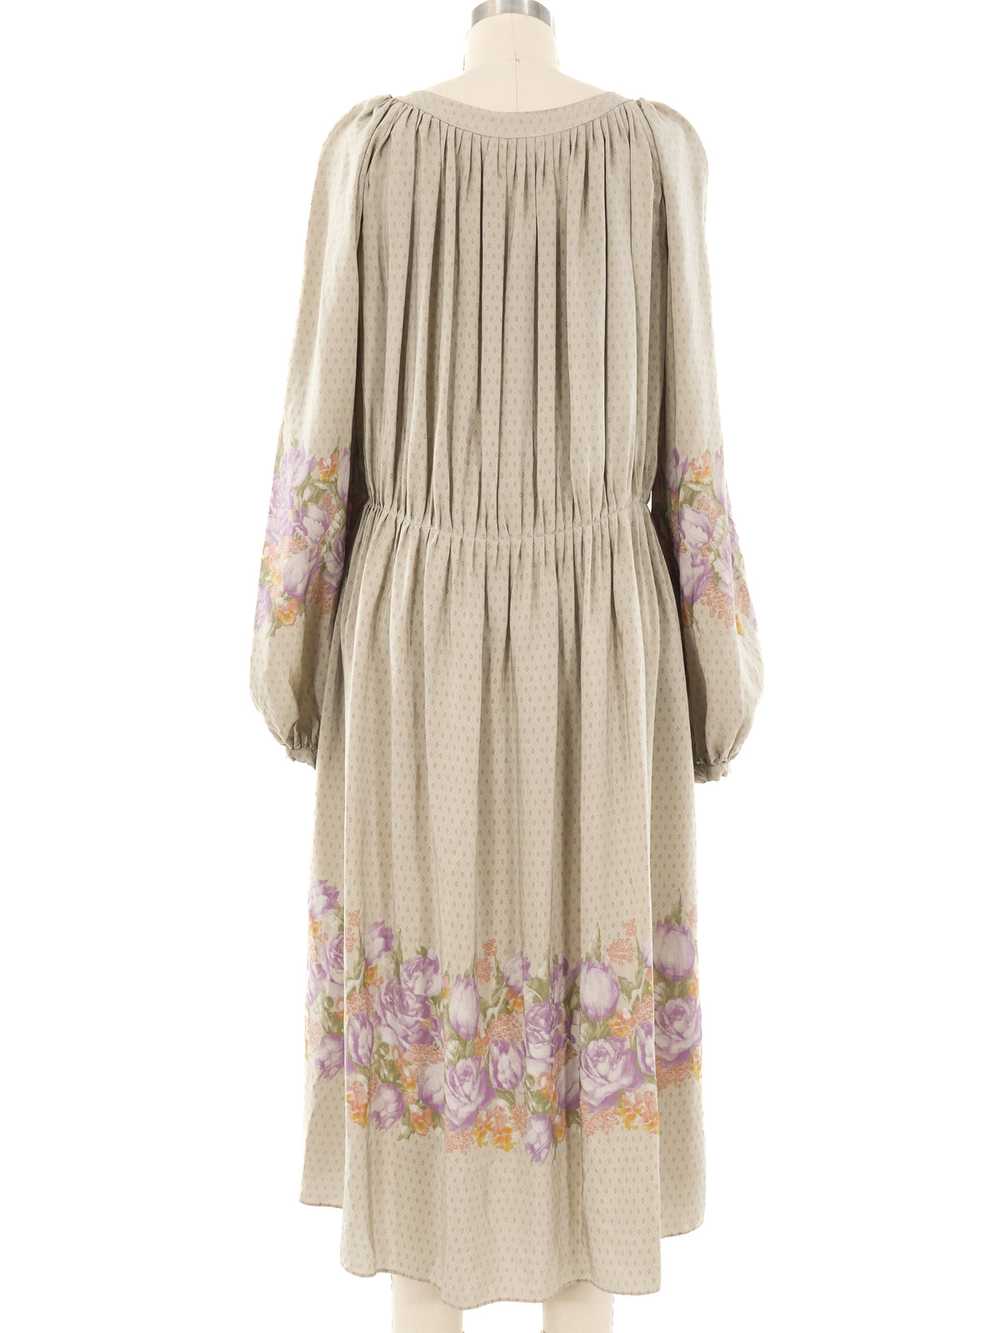 Ted Lapidus Mixed Print Silk Dress - image 4